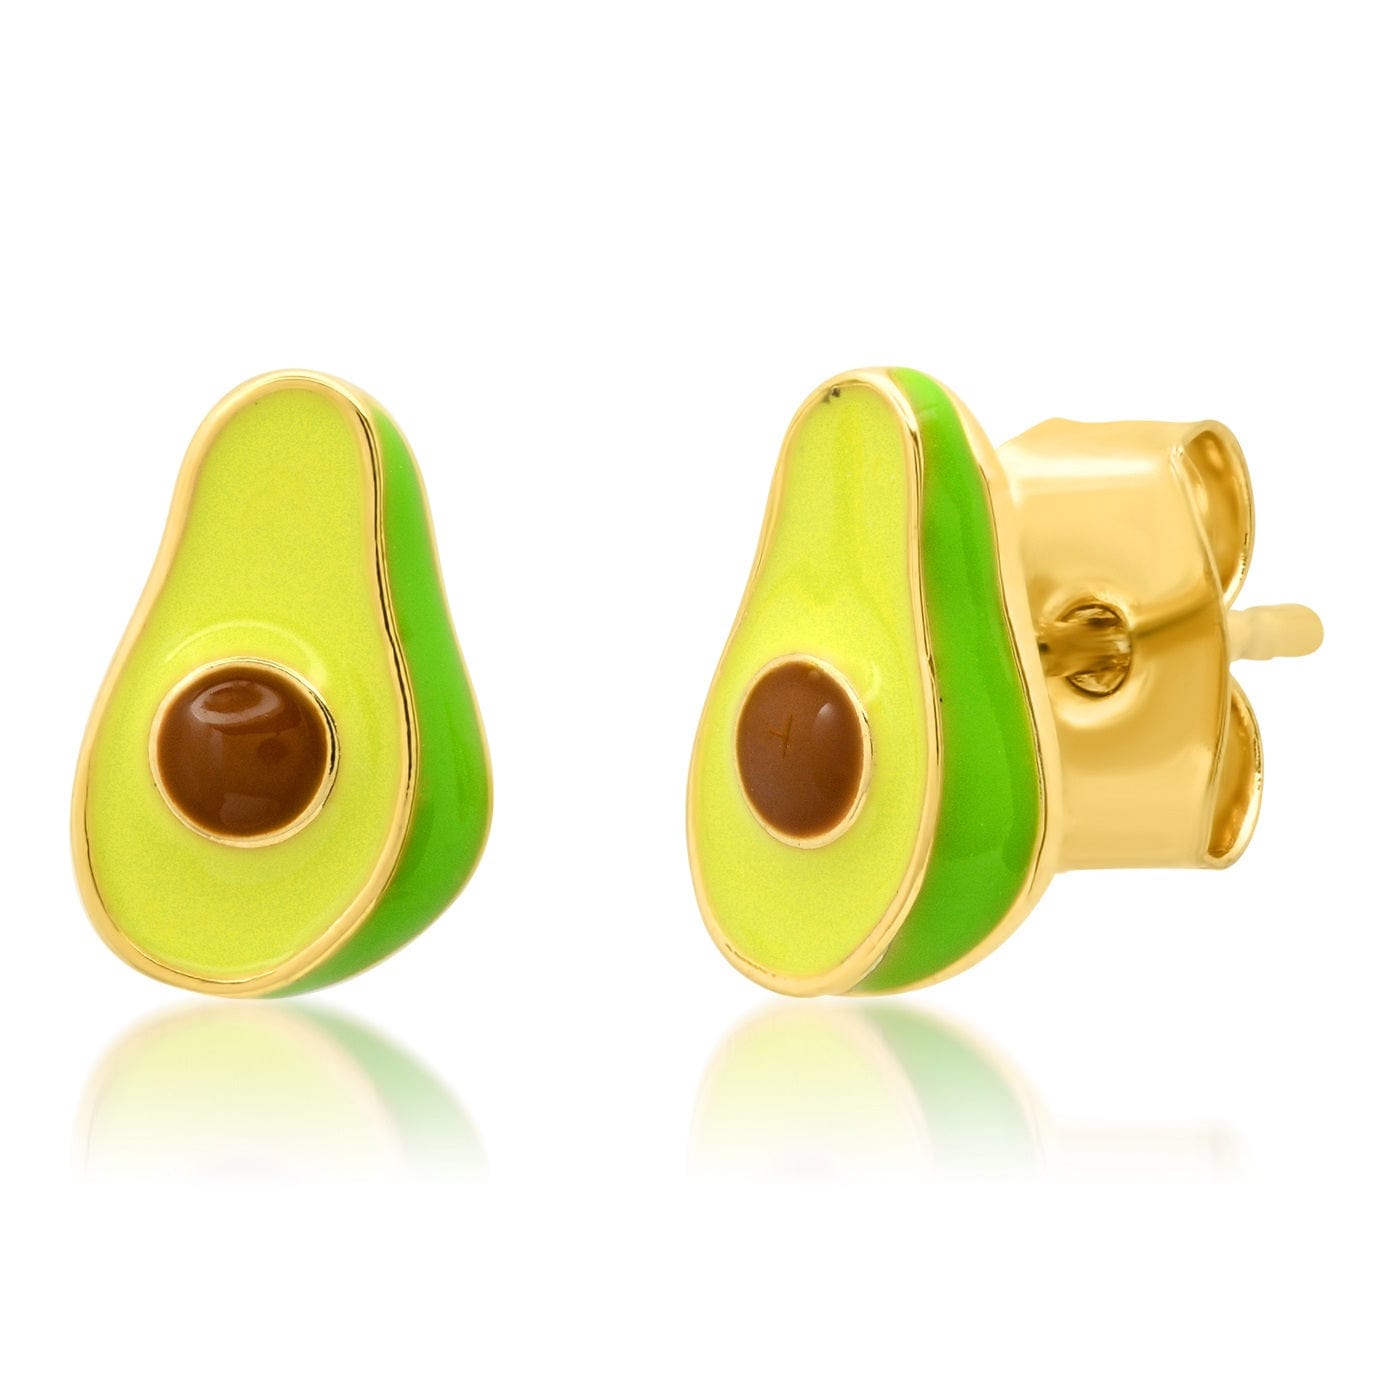 TAI JEWELRY Earrings Avocado Studs